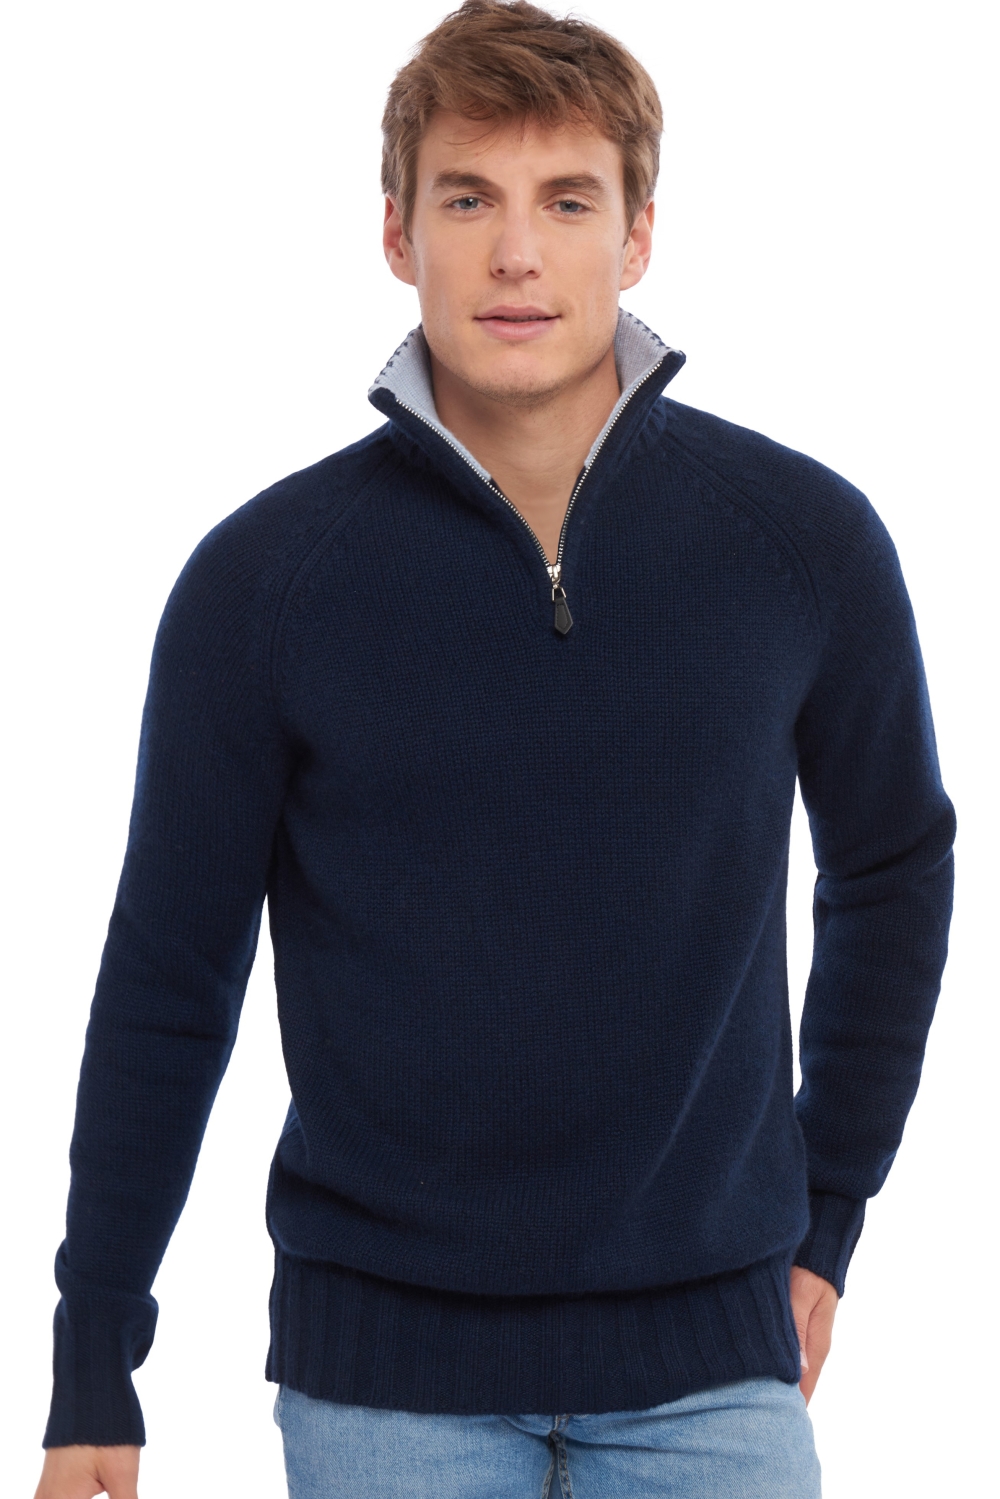 Cashmere men chunky sweater olivier dress blue bayou 4xl